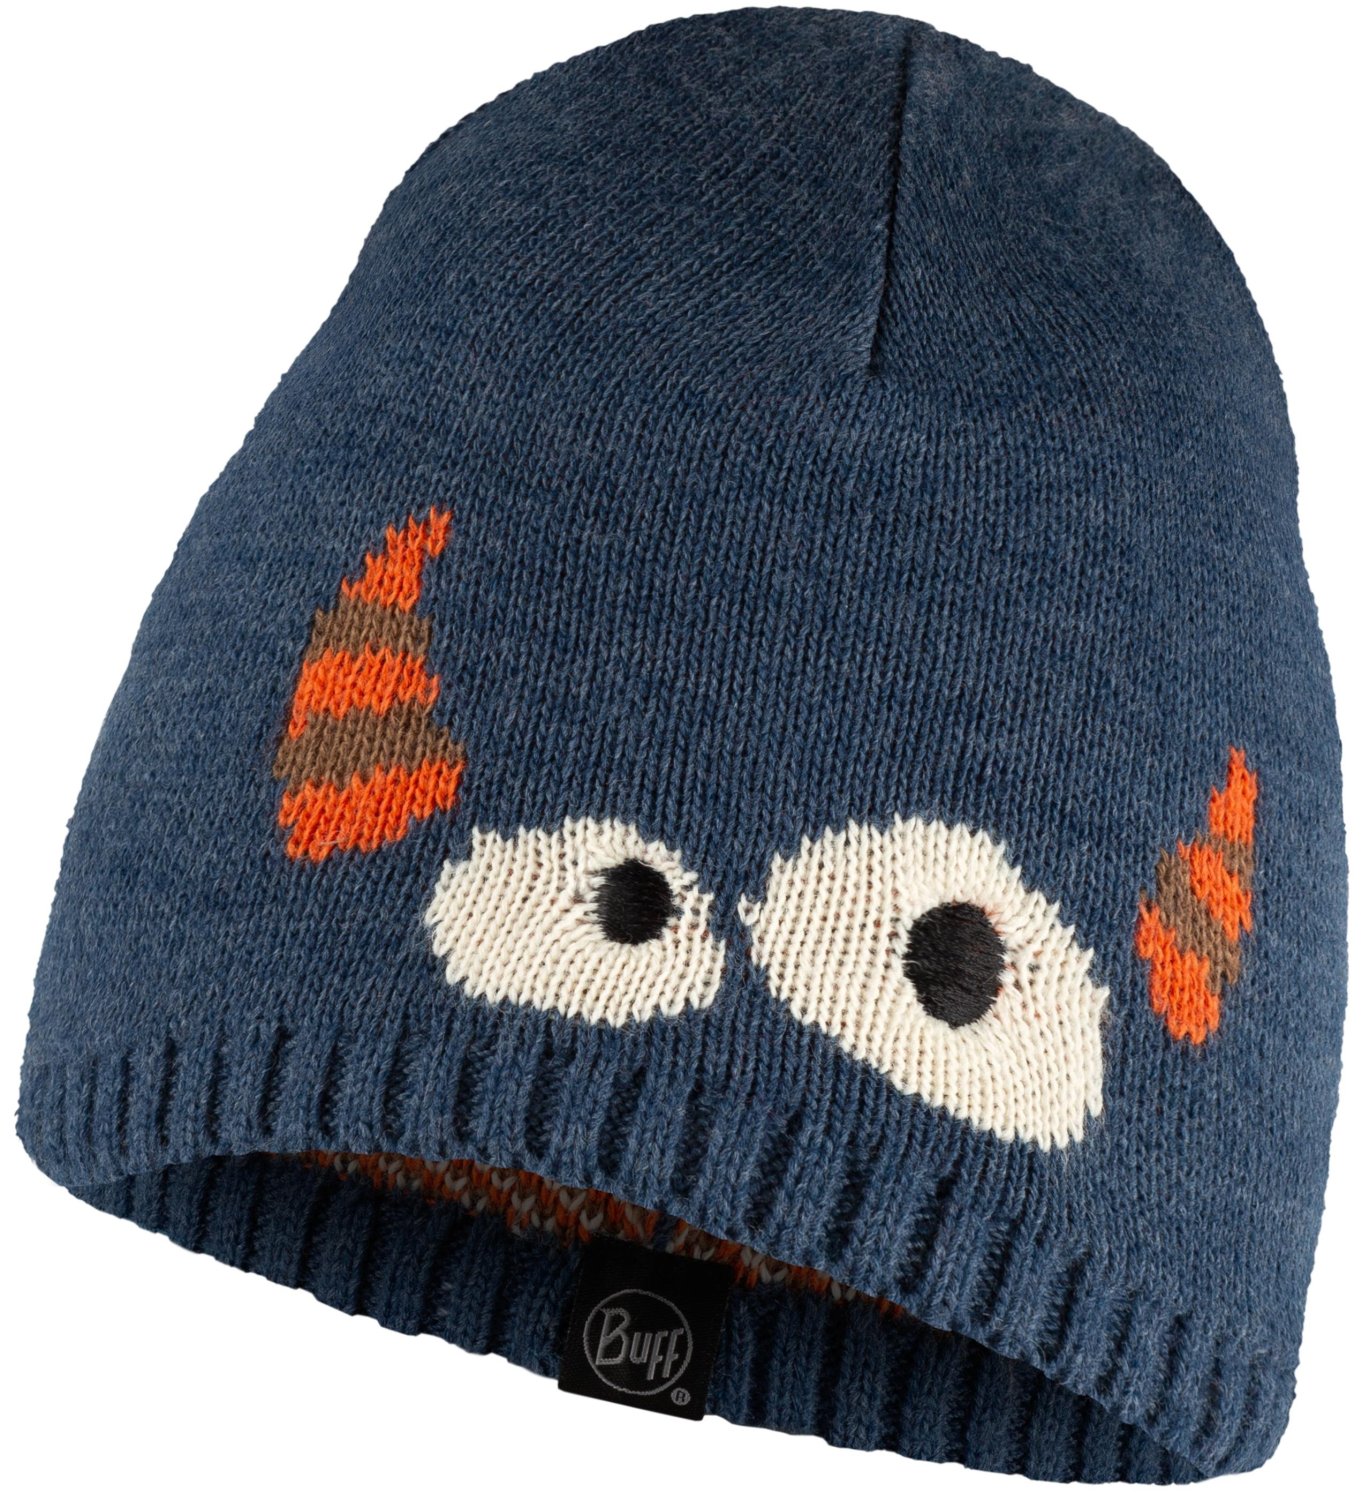 Шапка Buff Knitted Hat Bonky Eyes Denim US:one size, 129626.788.10.00 купить на ЖДБЗ.ру